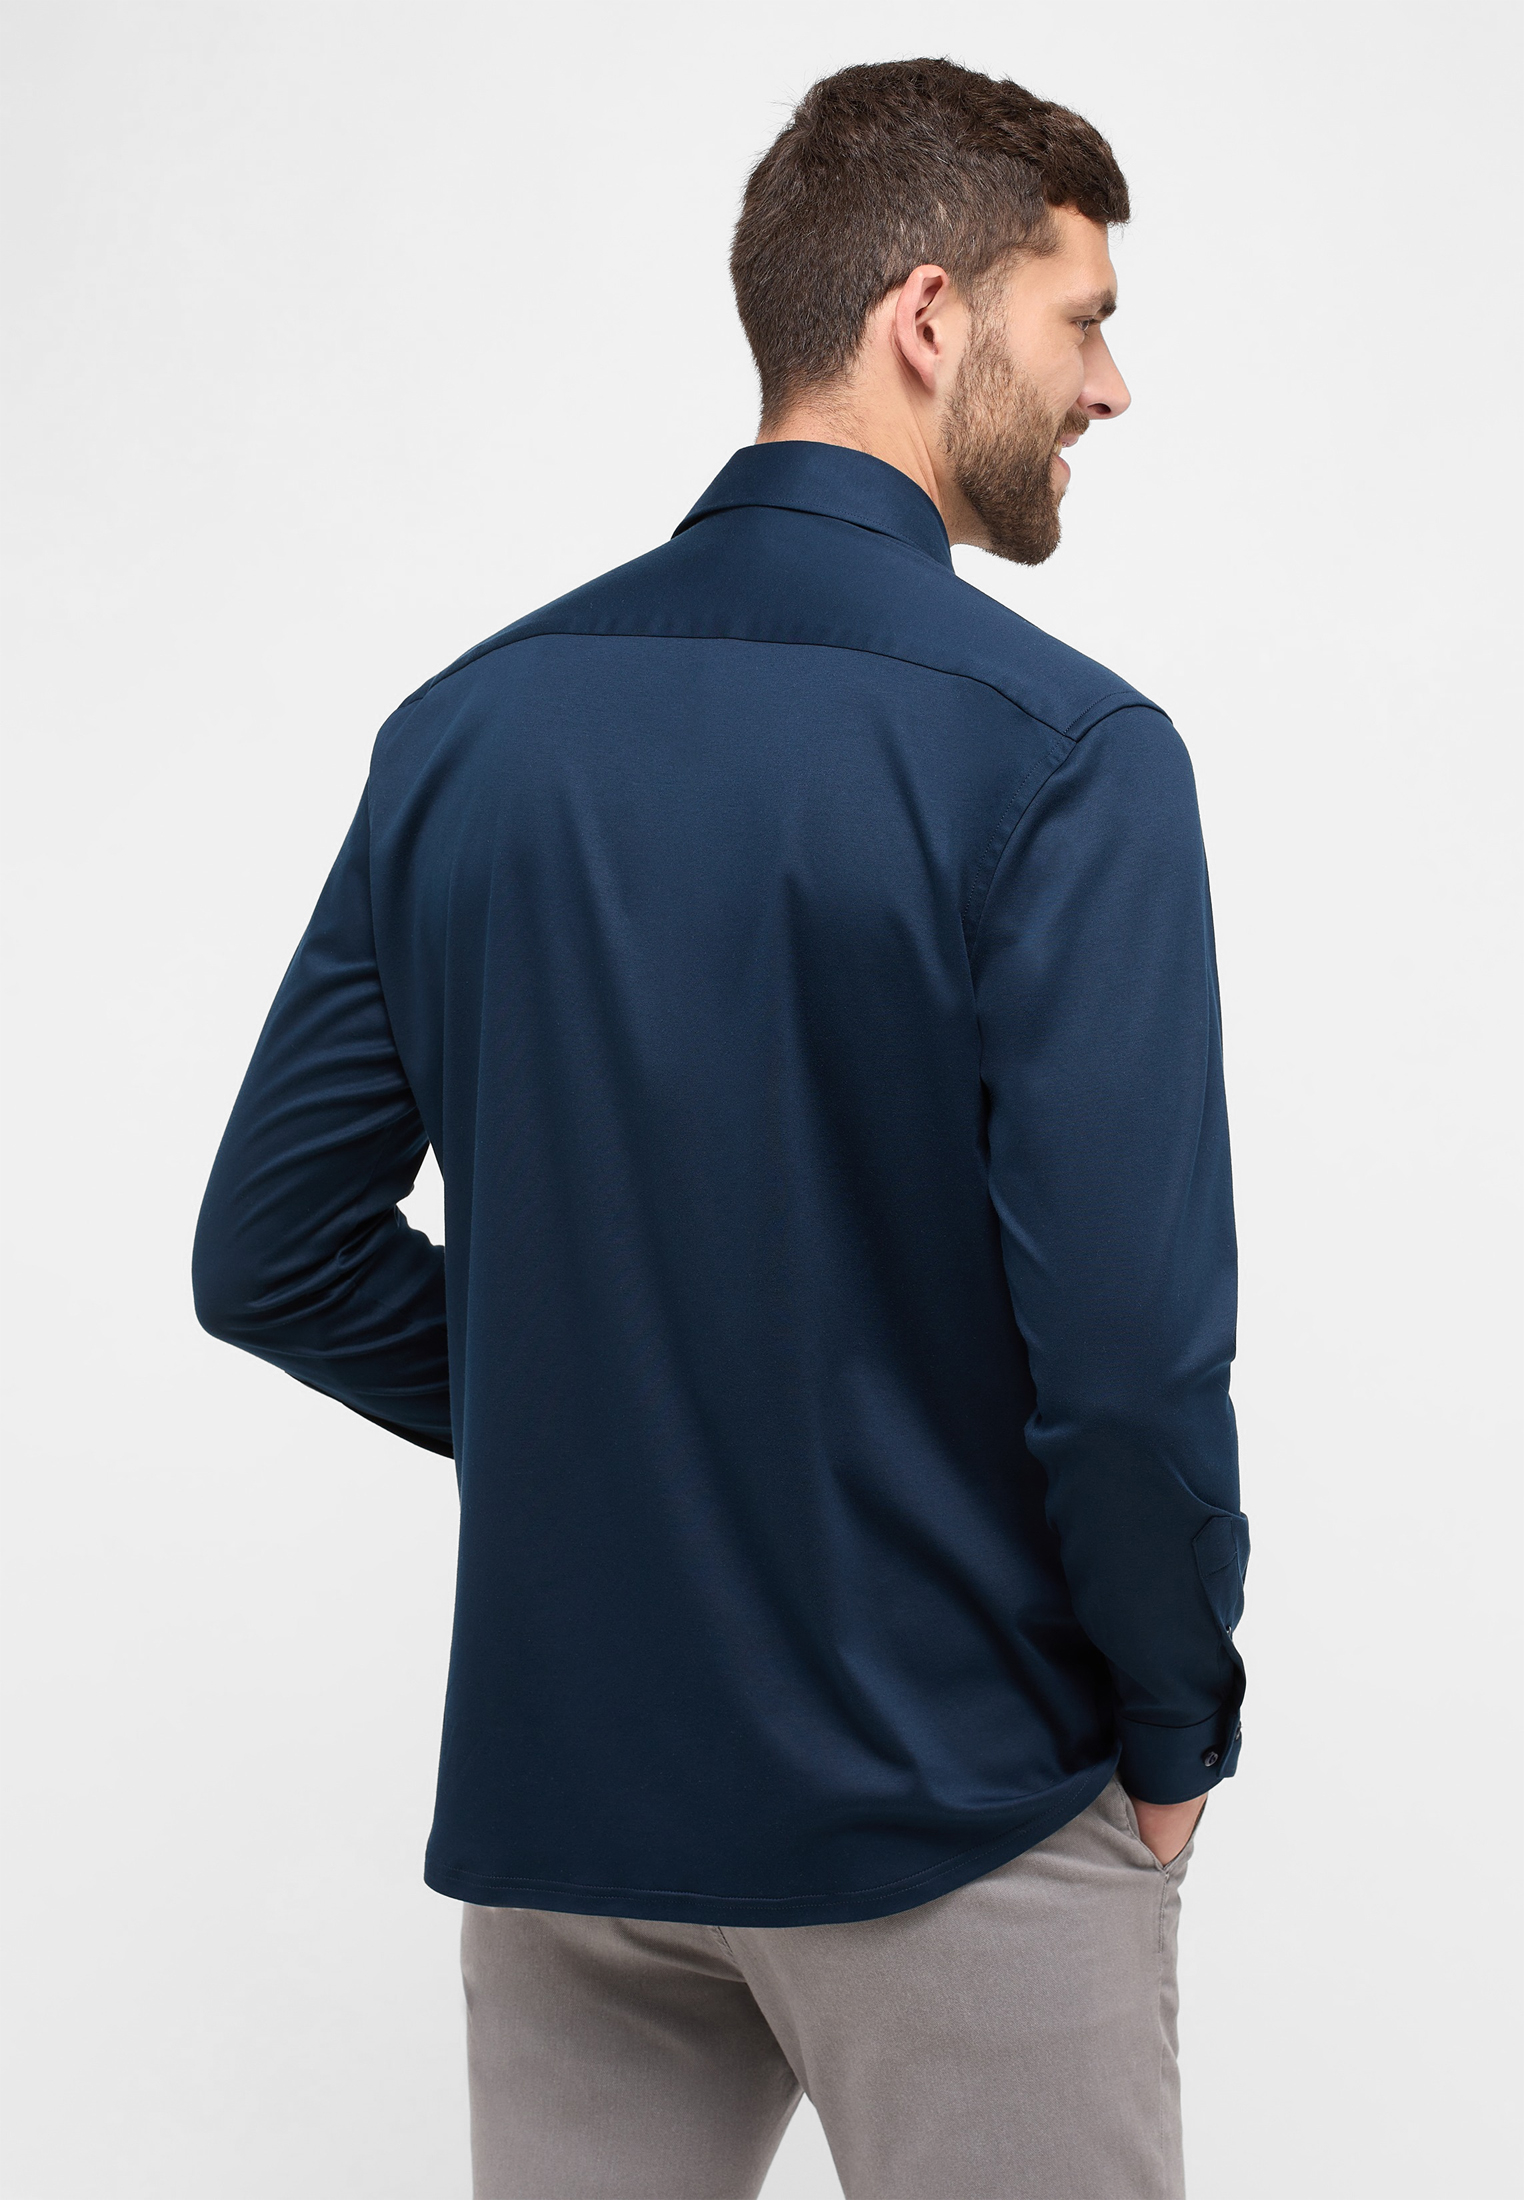 COMFORT FIT Jersey Shirt in dunkelblau unifarben | dunkelblau | 46 |  Langarm | 1SH00376-01-81-46-1/1